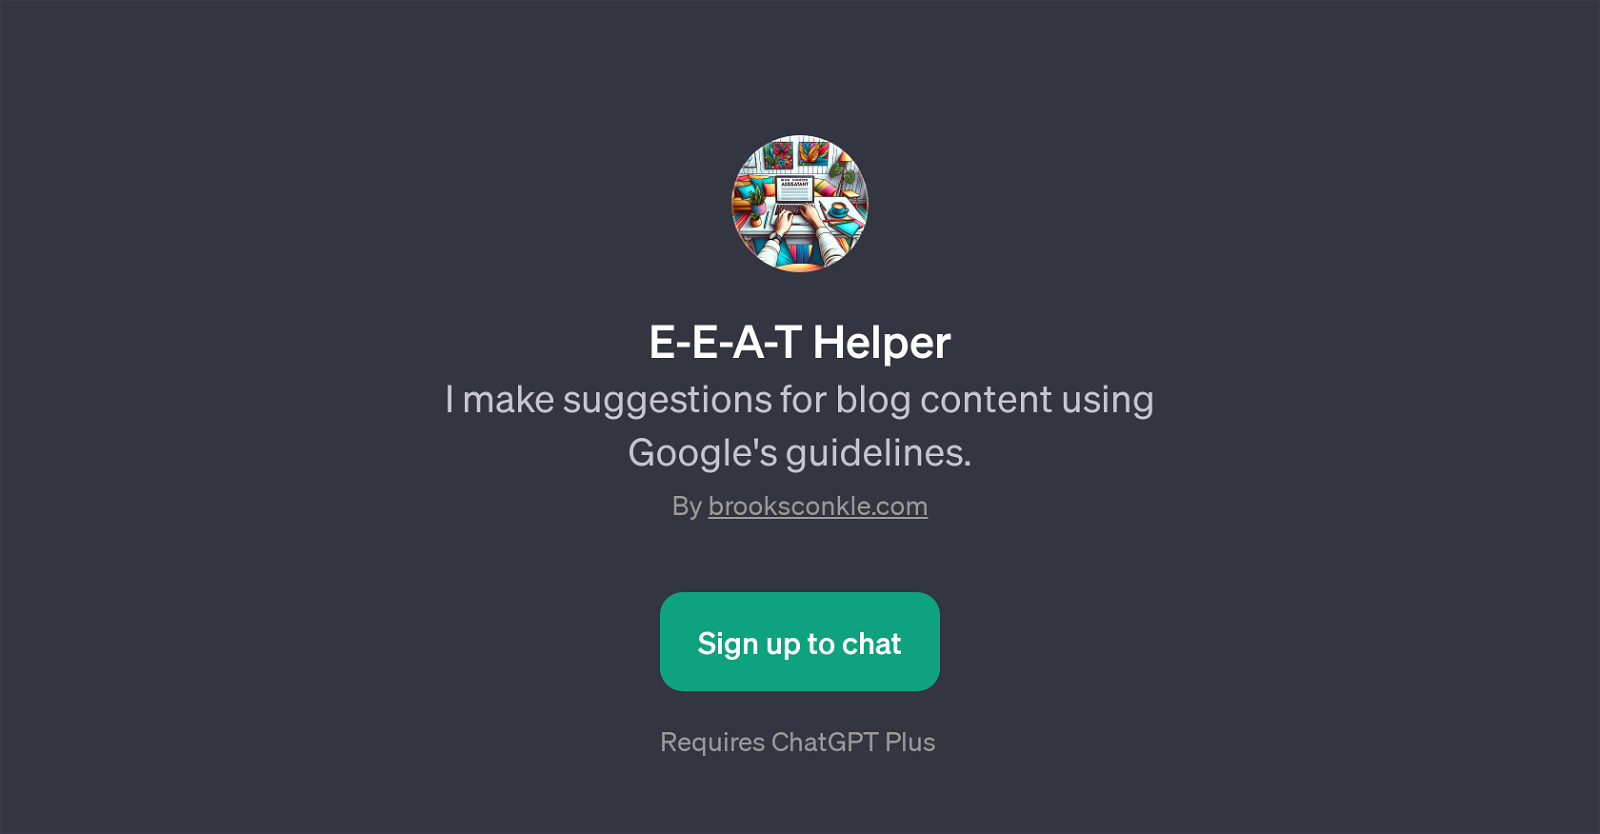 E-E-A-T Helper website